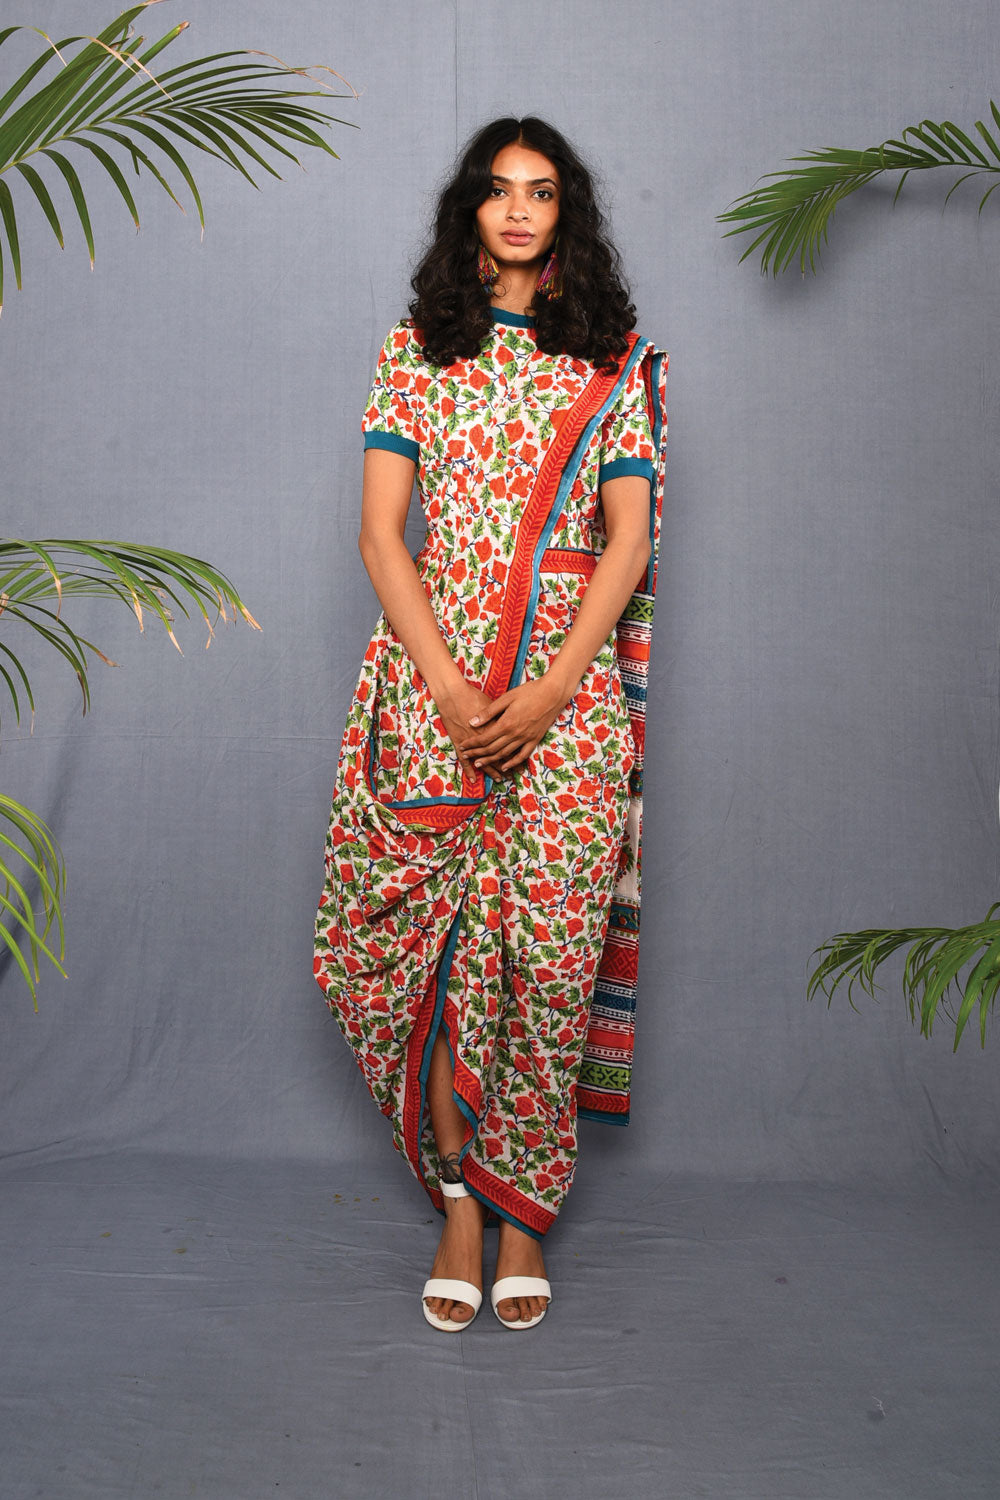 Sari trends you can bookmark from Shilpa Shetty, Malaika Arora, Deepika  Padukone & more Bollywood celebs